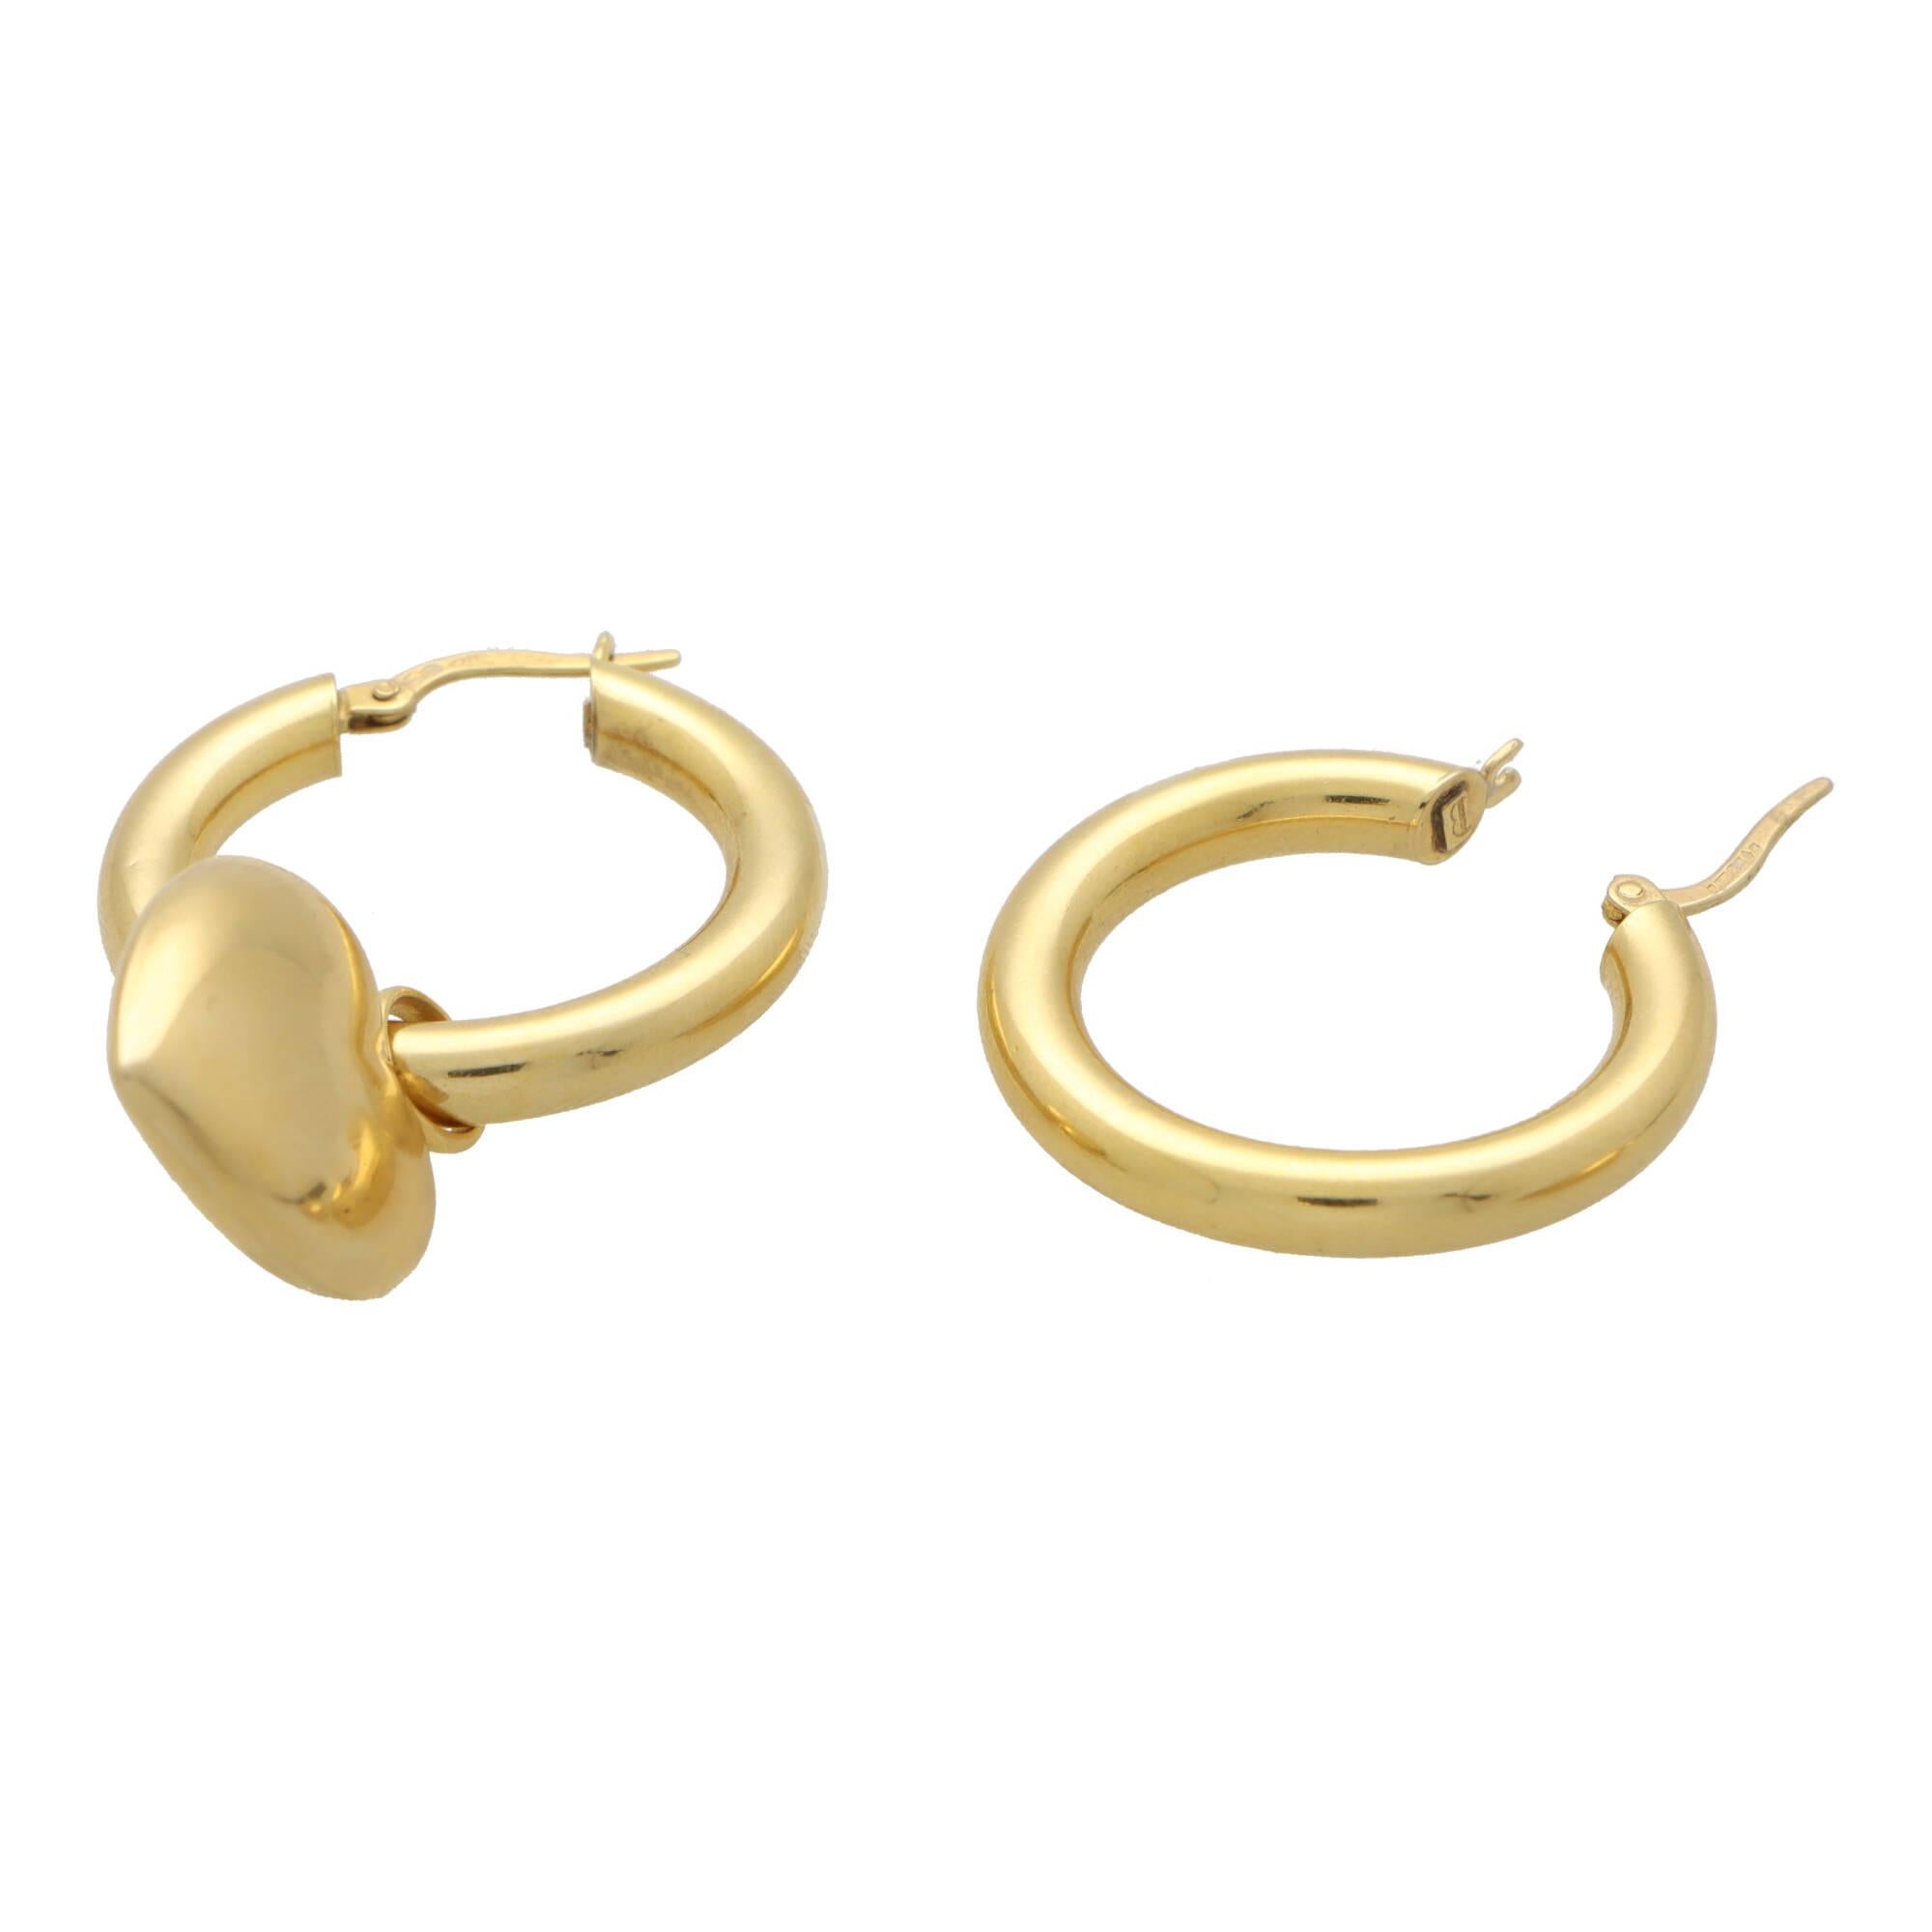 Vintage Retro Convertible Heart Drop Hoop Earrings in 9k Yellow Gold For Sale 2